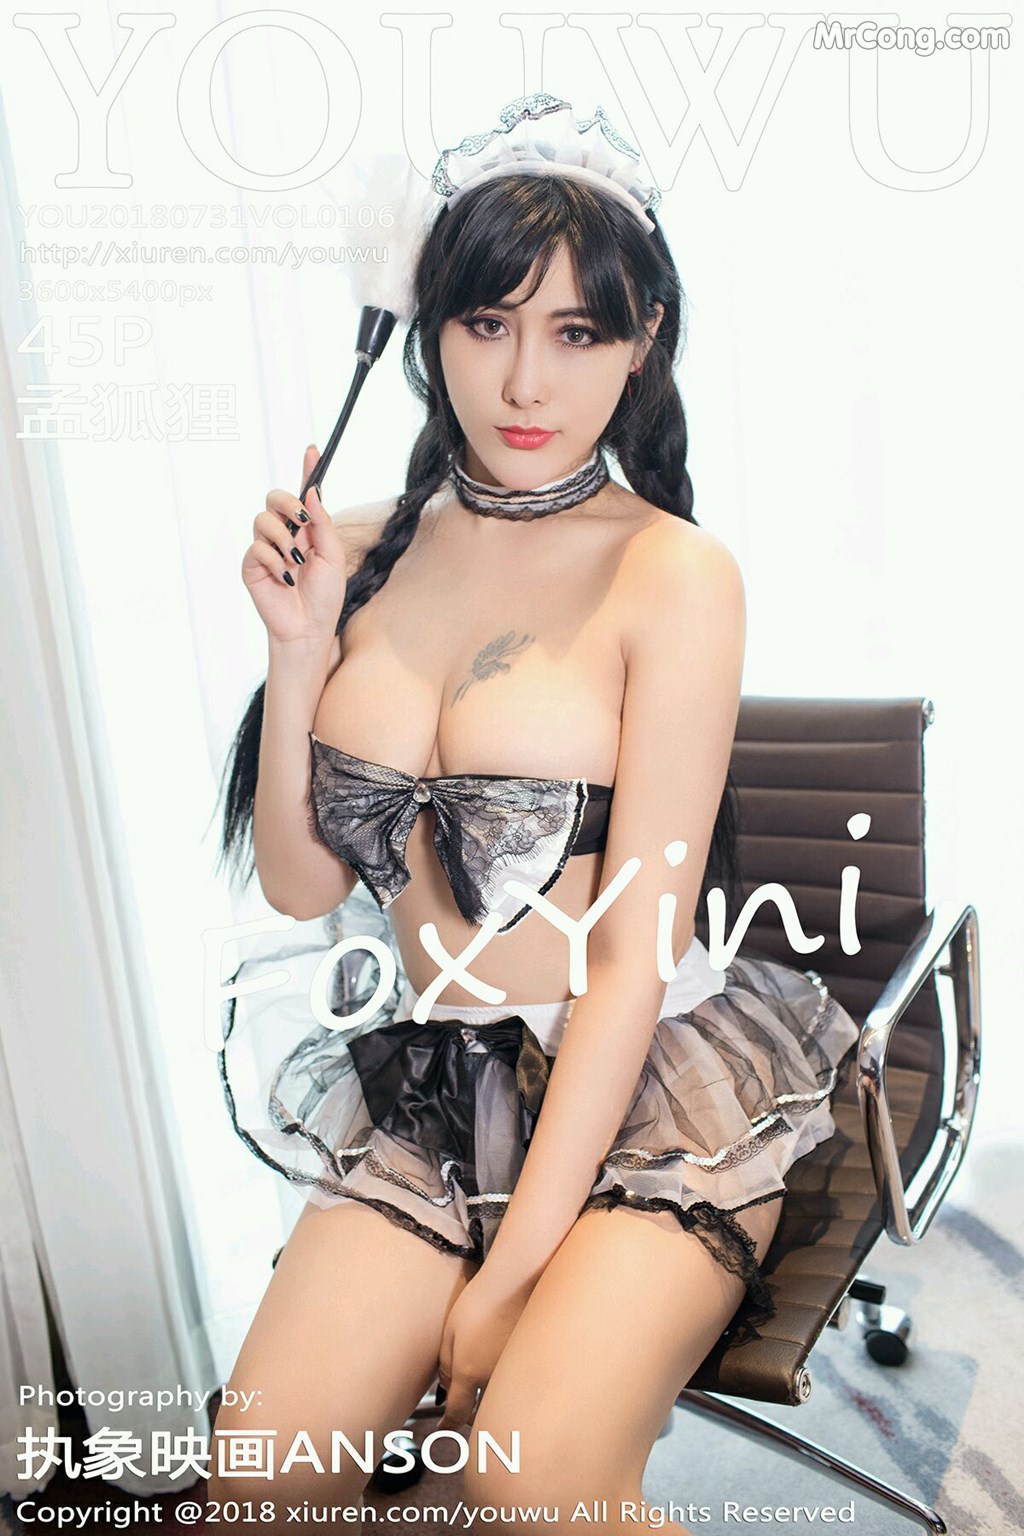 YouWu Vol.106: FoxYini Model (孟 狐狸) (46 photos)